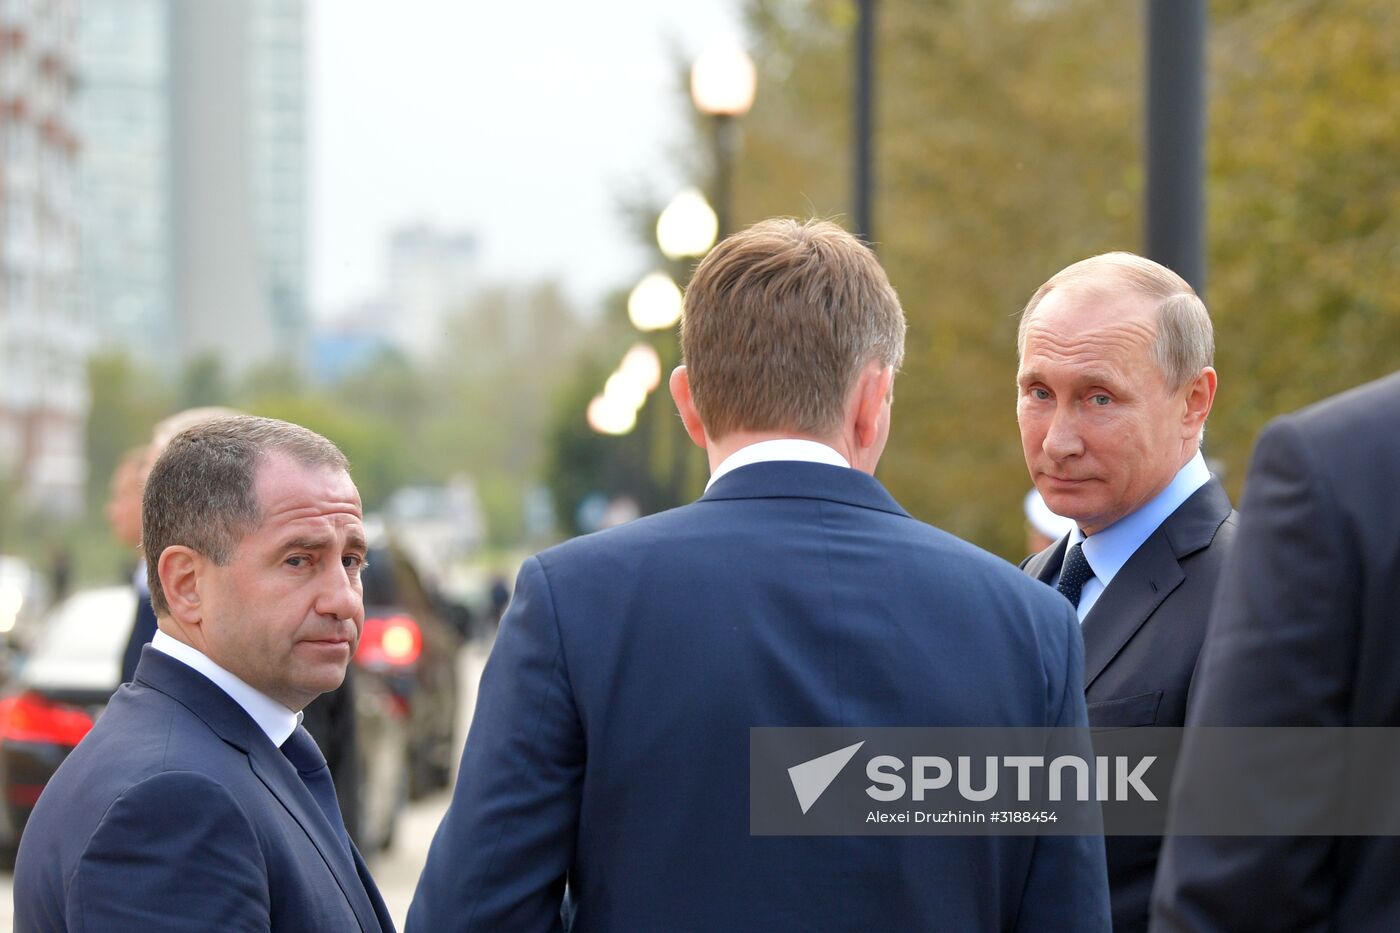 President Putin's working visit to Perm